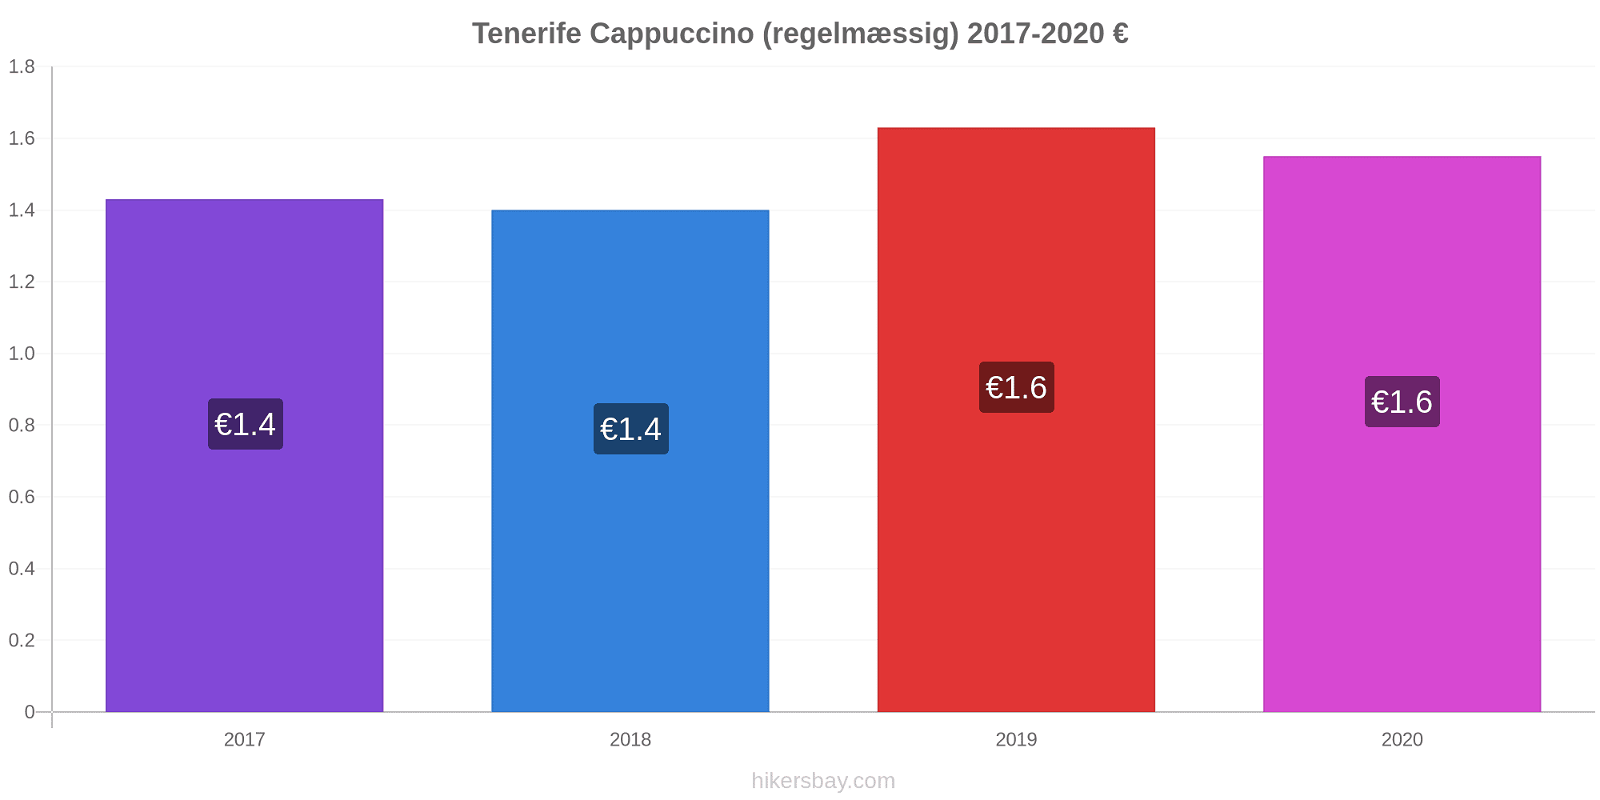 Tenerife prisændringer Cappuccino (regelmæssig) hikersbay.com